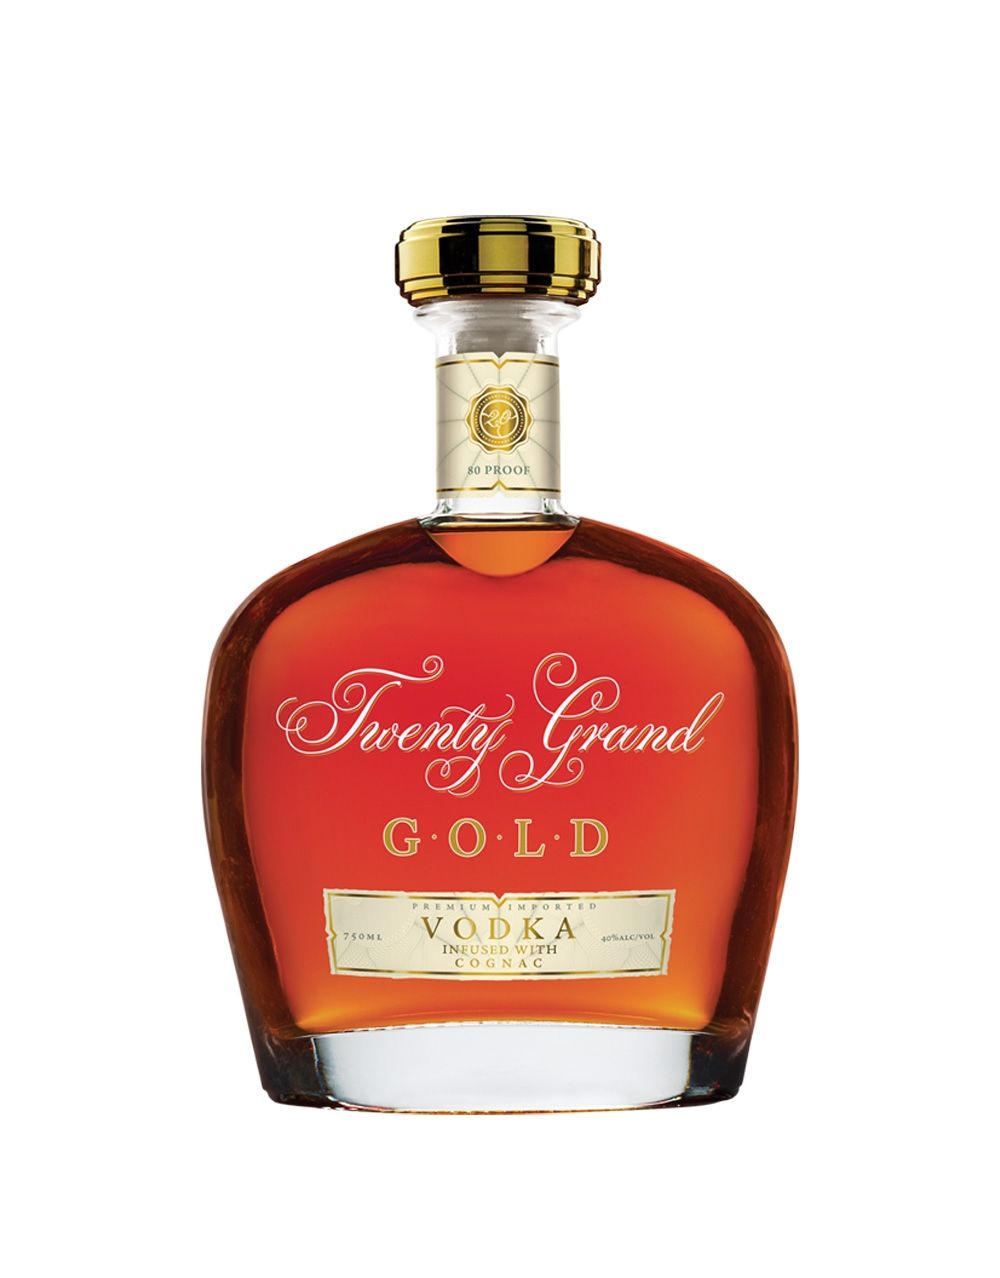 Twenty Grand GOLD VODKA Infused with Cognac | ReserveBar